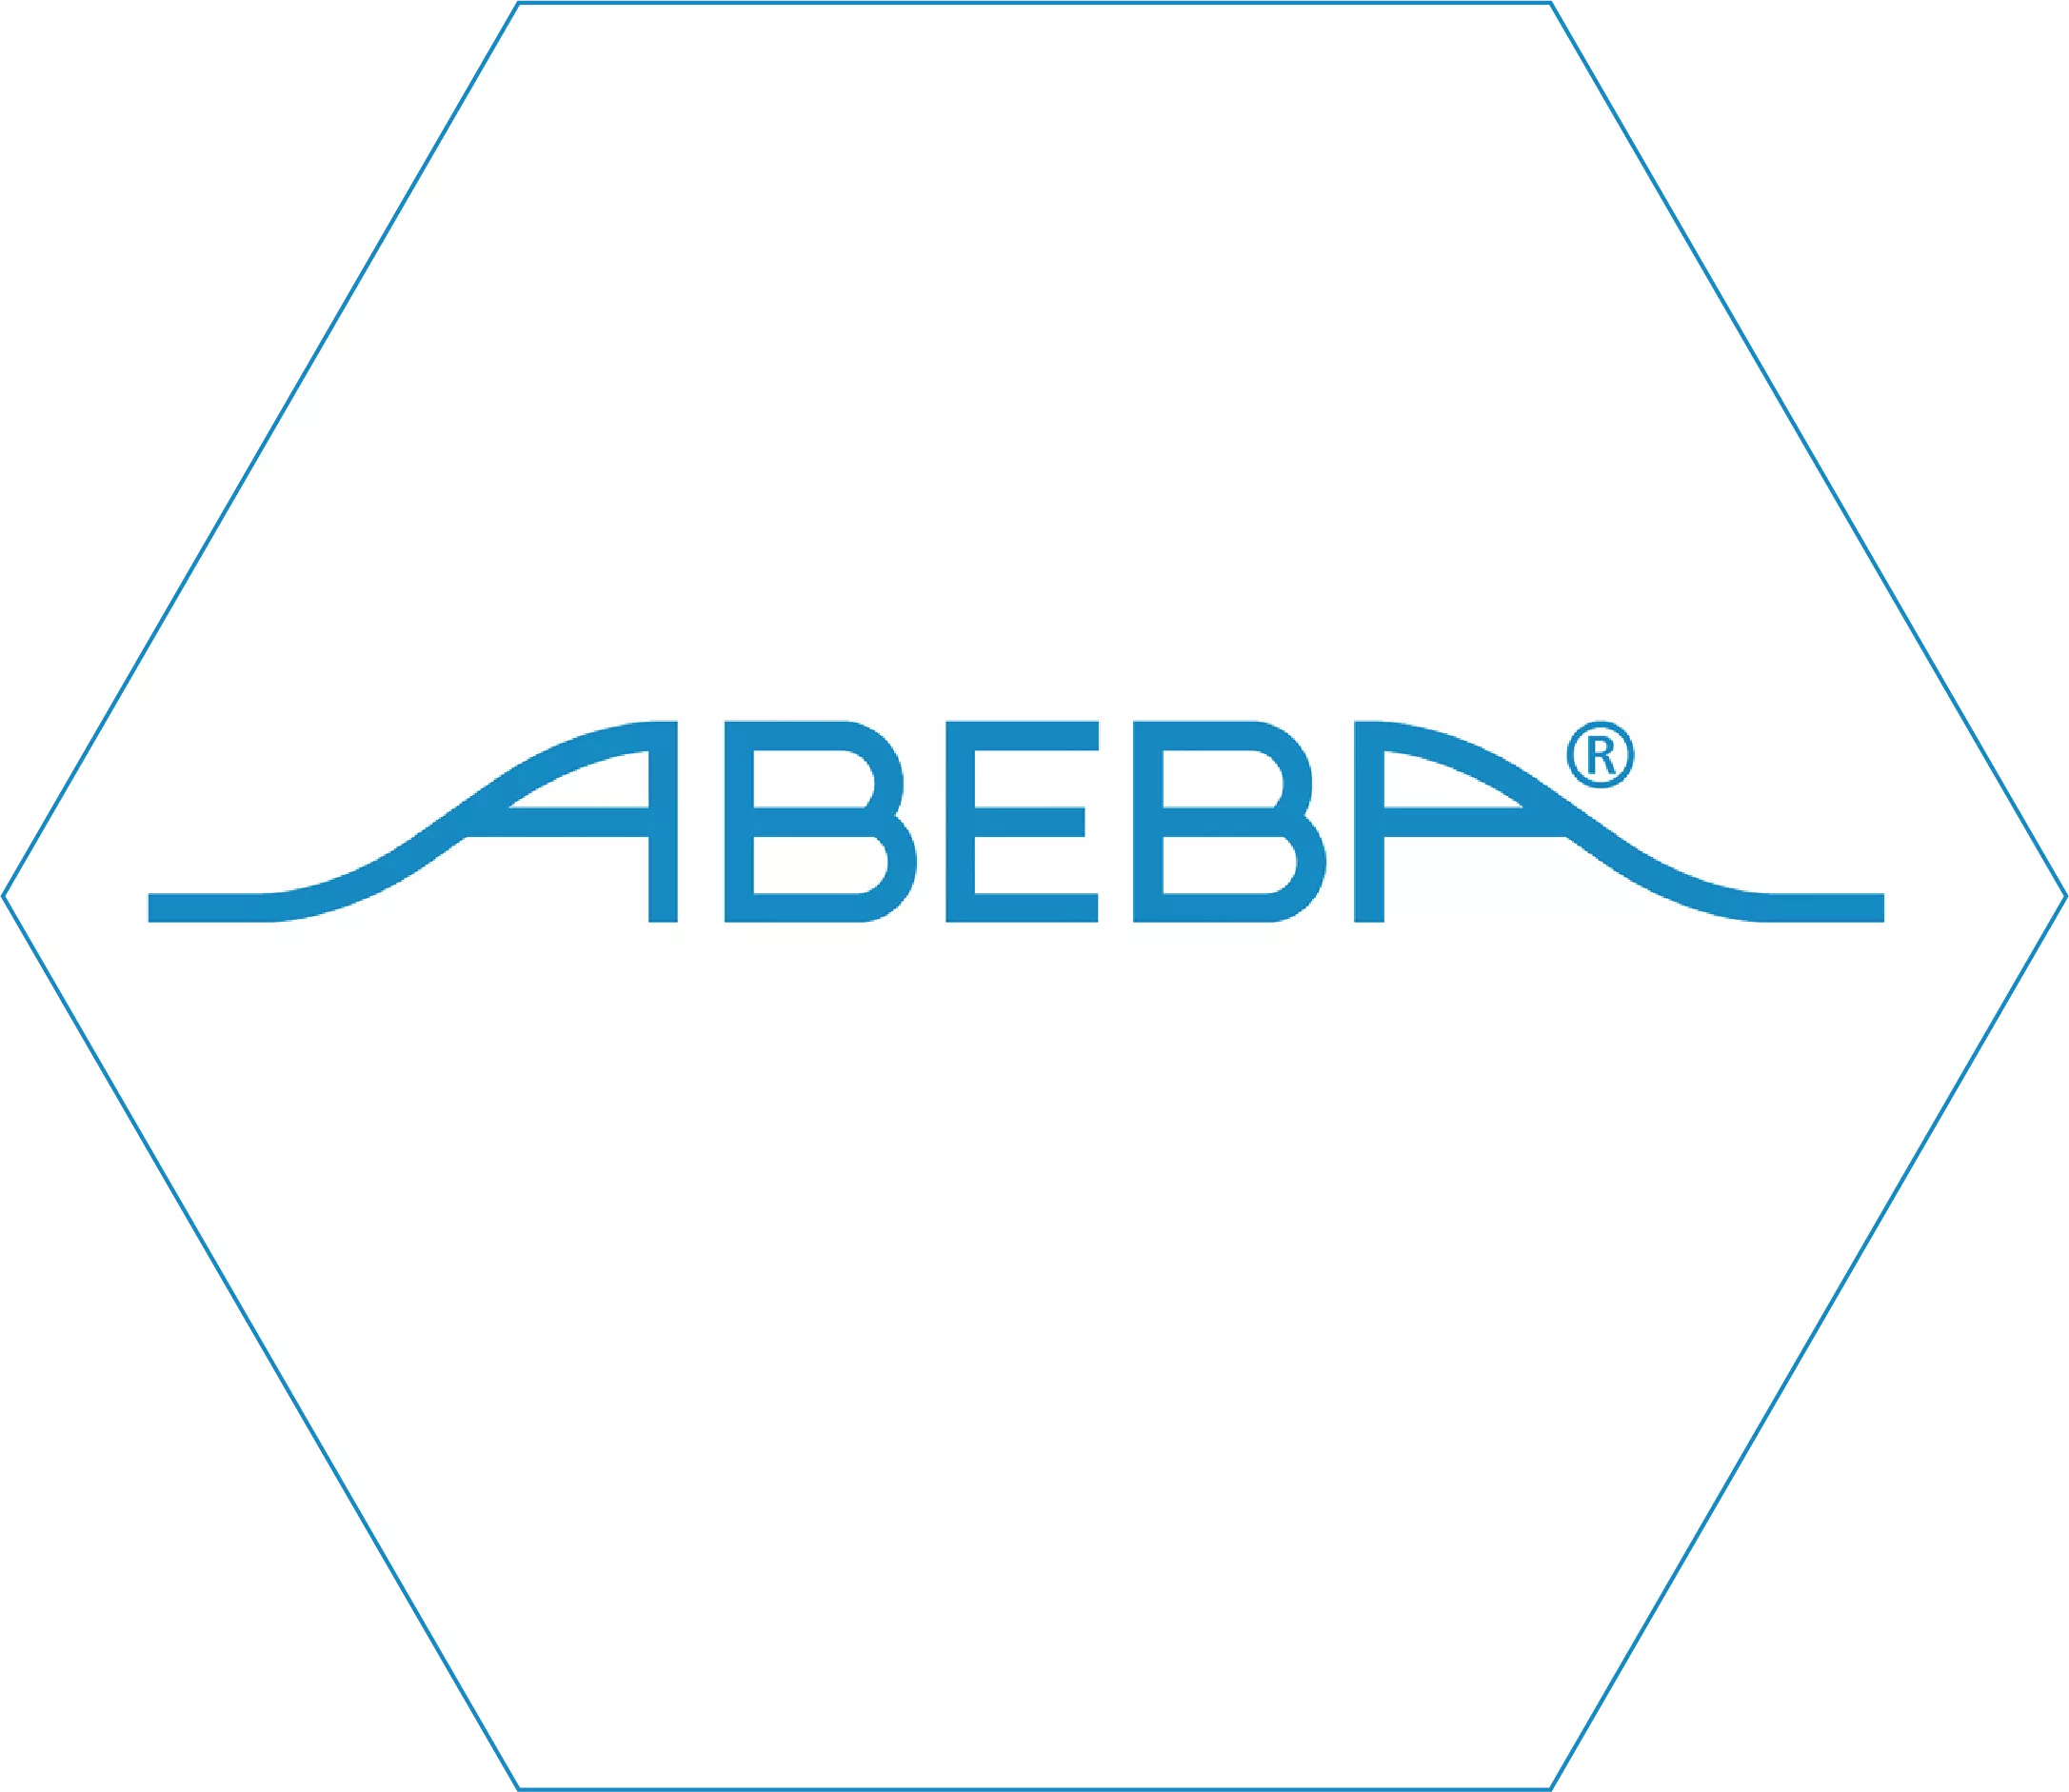 Logo Abeba